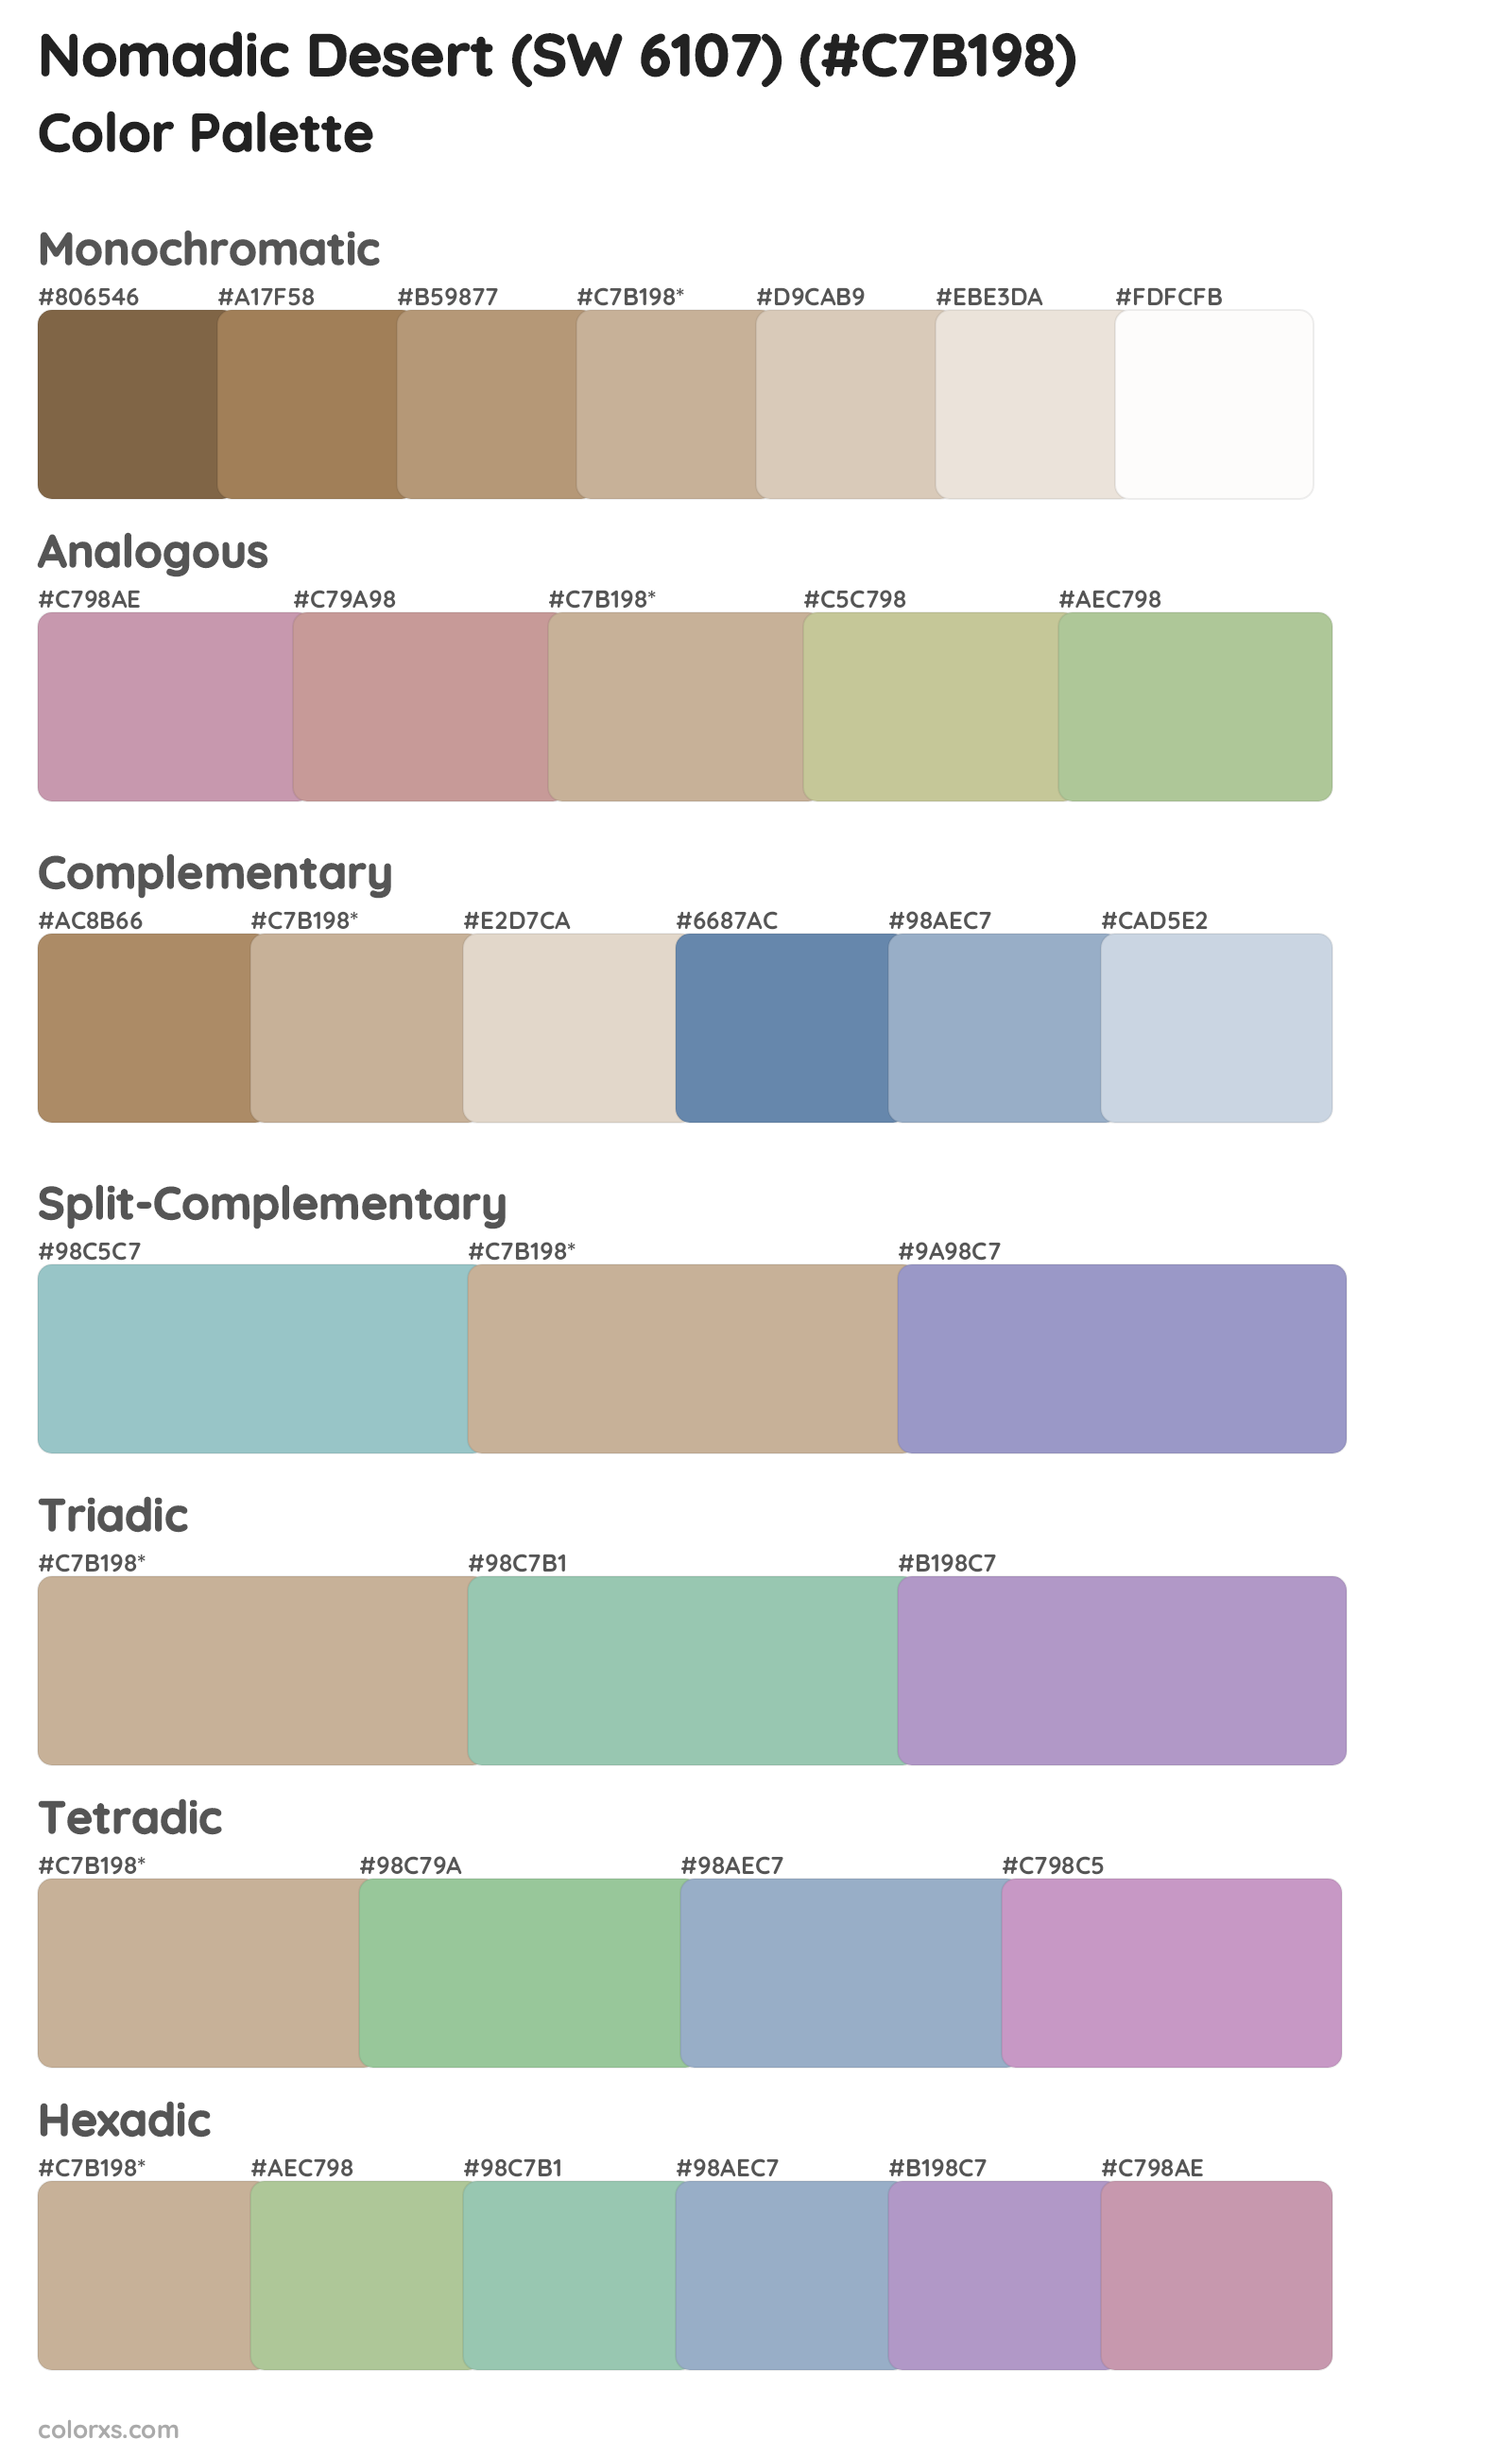 Nomadic Desert (SW 6107) Color Scheme Palettes